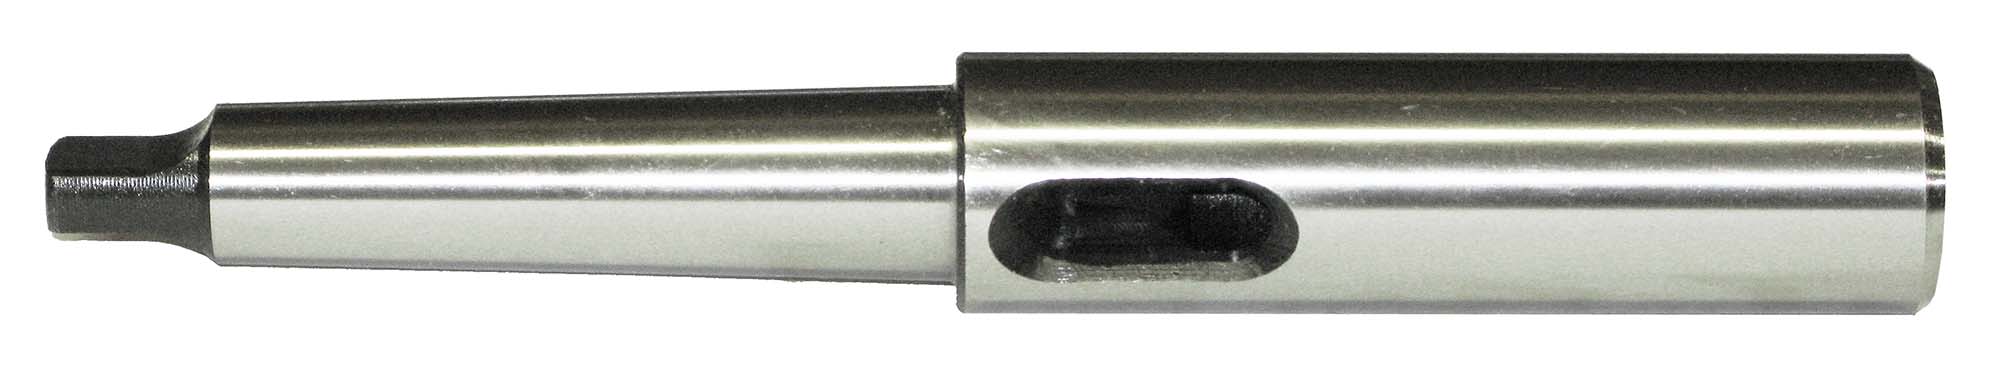 2 Morse Taper(hole)-2 Morse Taper(shank) Extension Socket, SL2-2